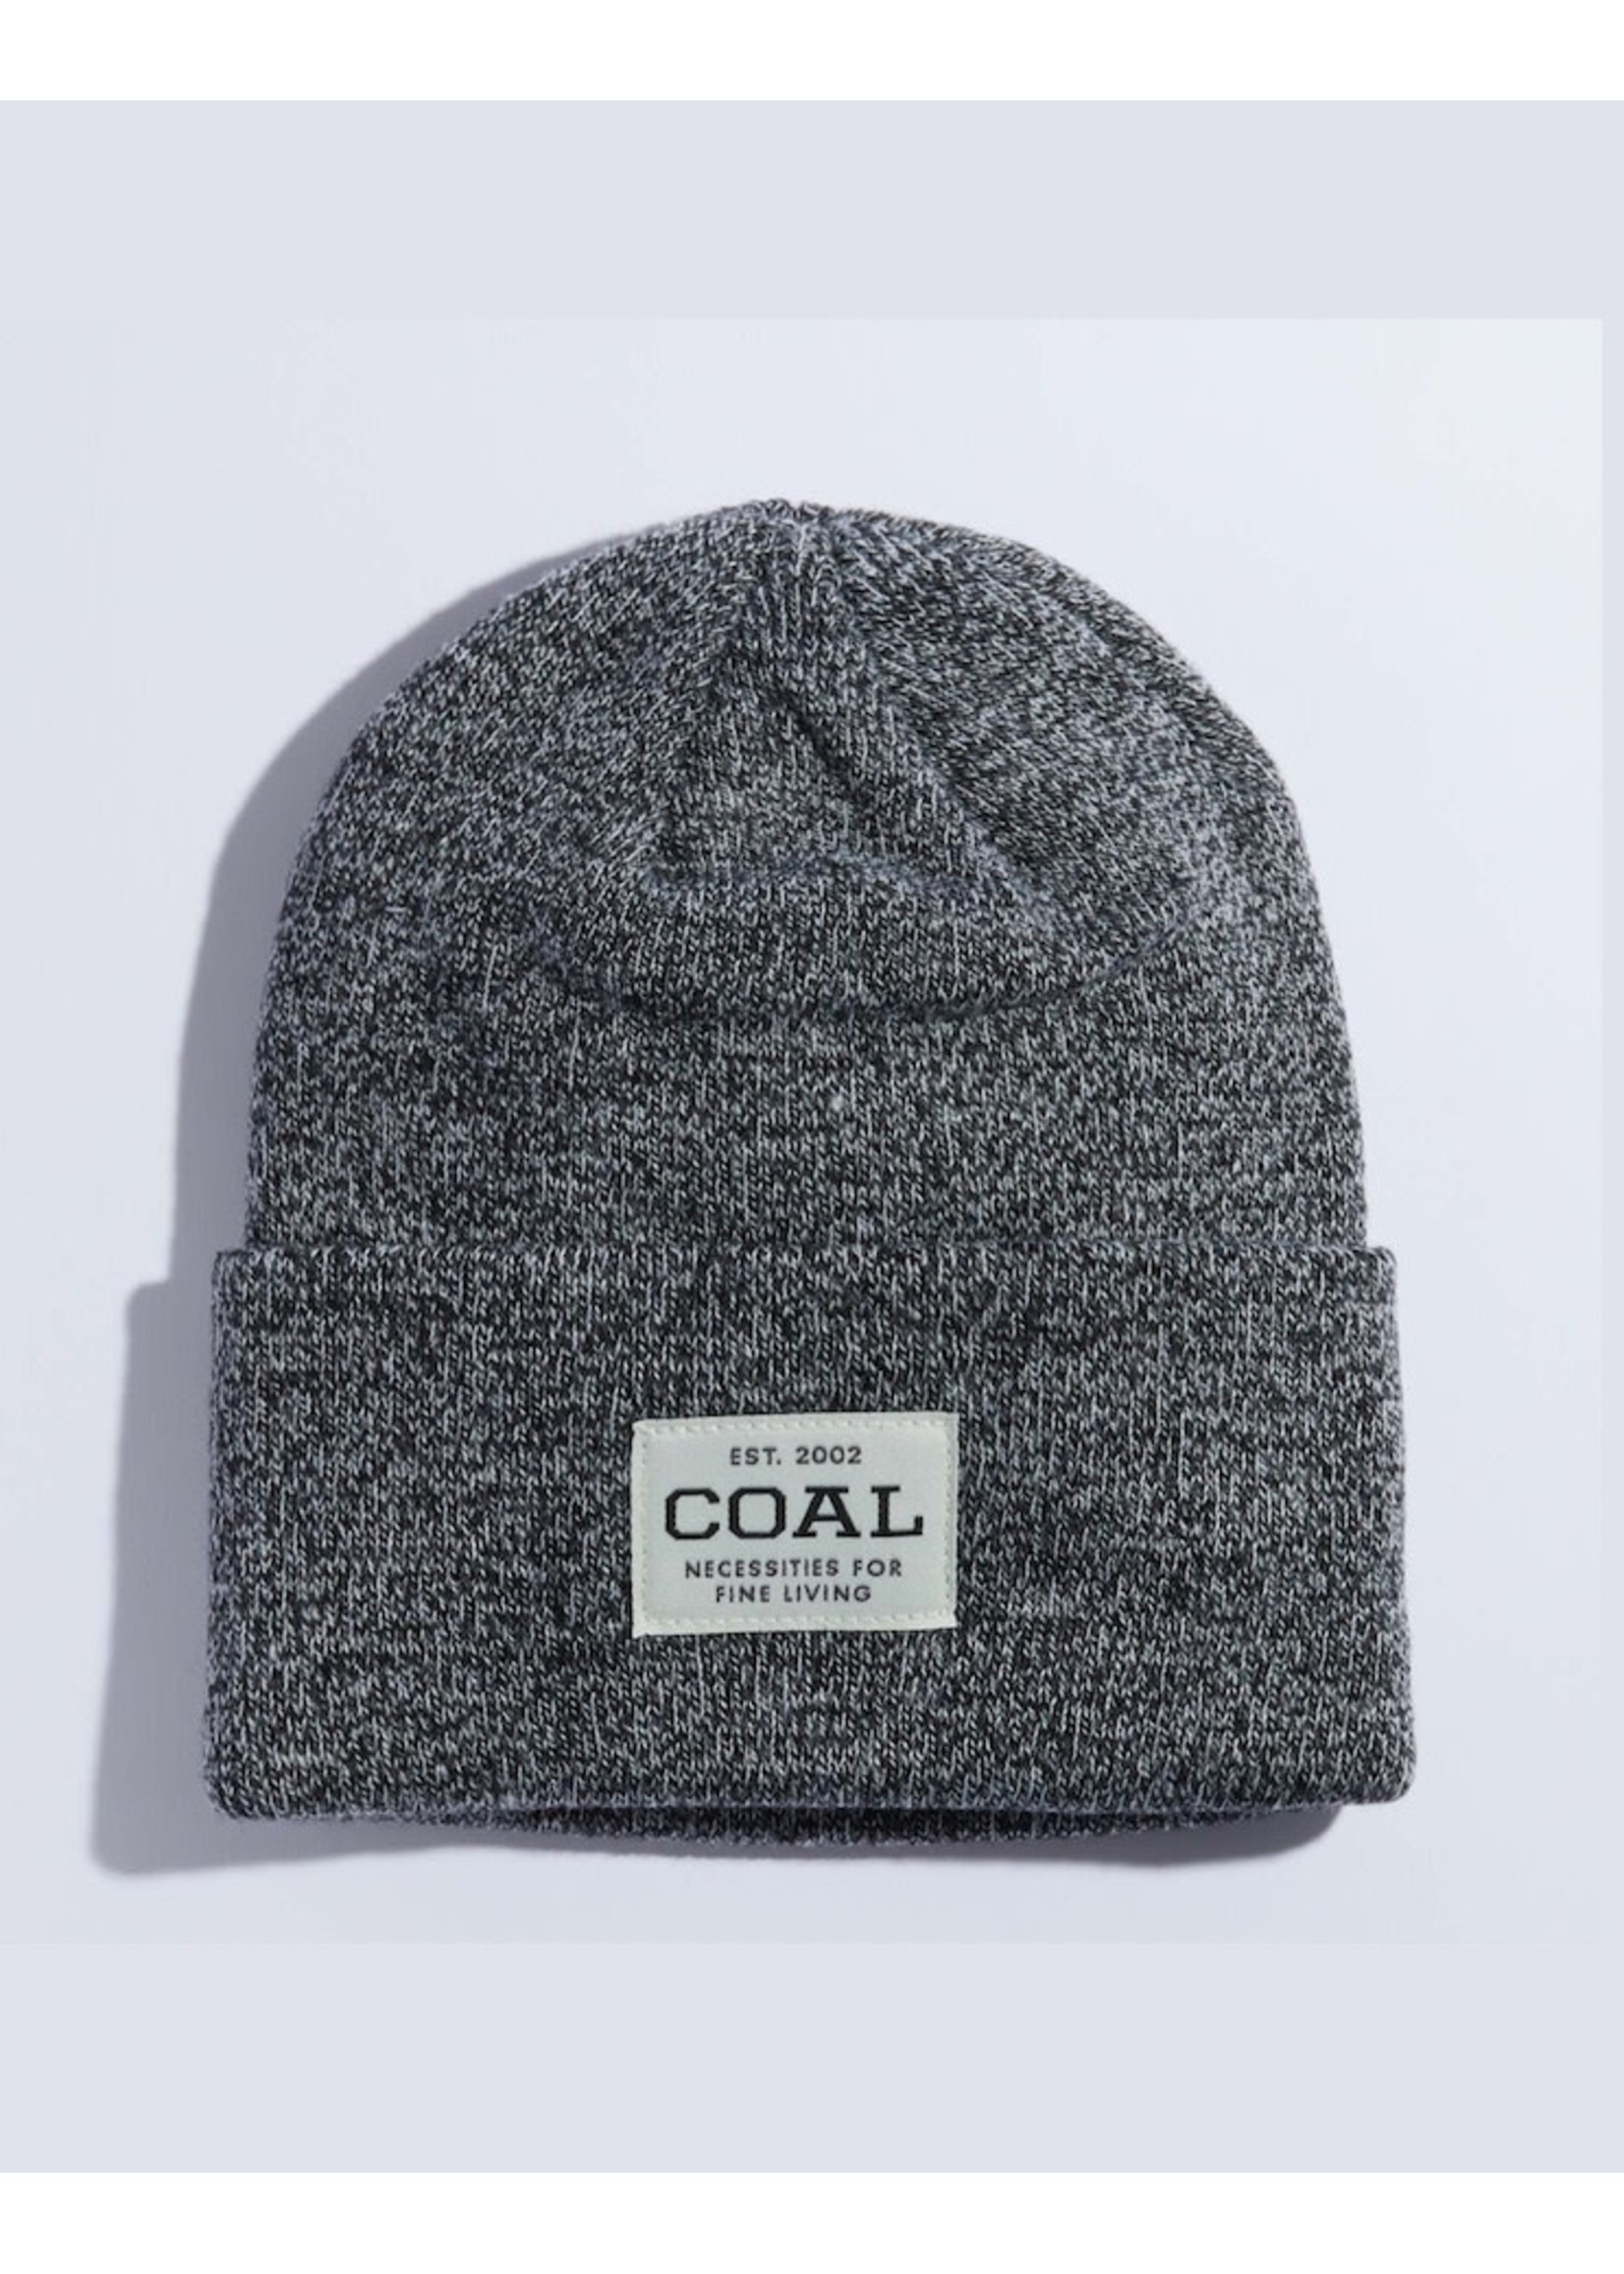 Coal Coal, The Uniform Kids Recycled Knit Cuff Beanie